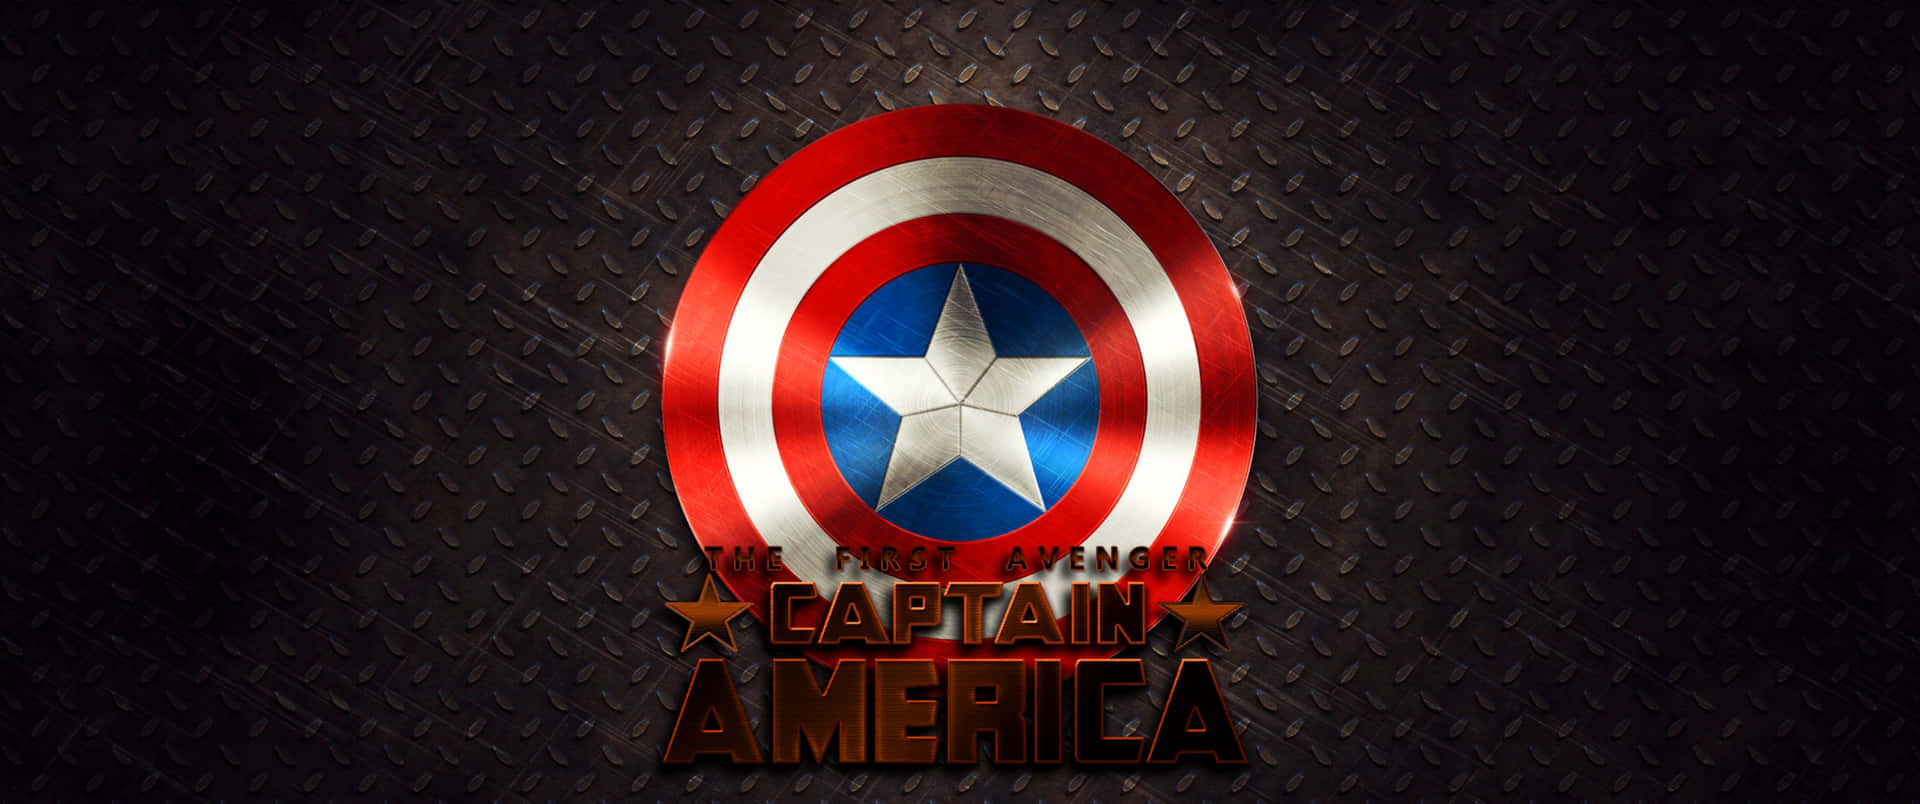 Marvel superhero Captain America looks powerful and determined